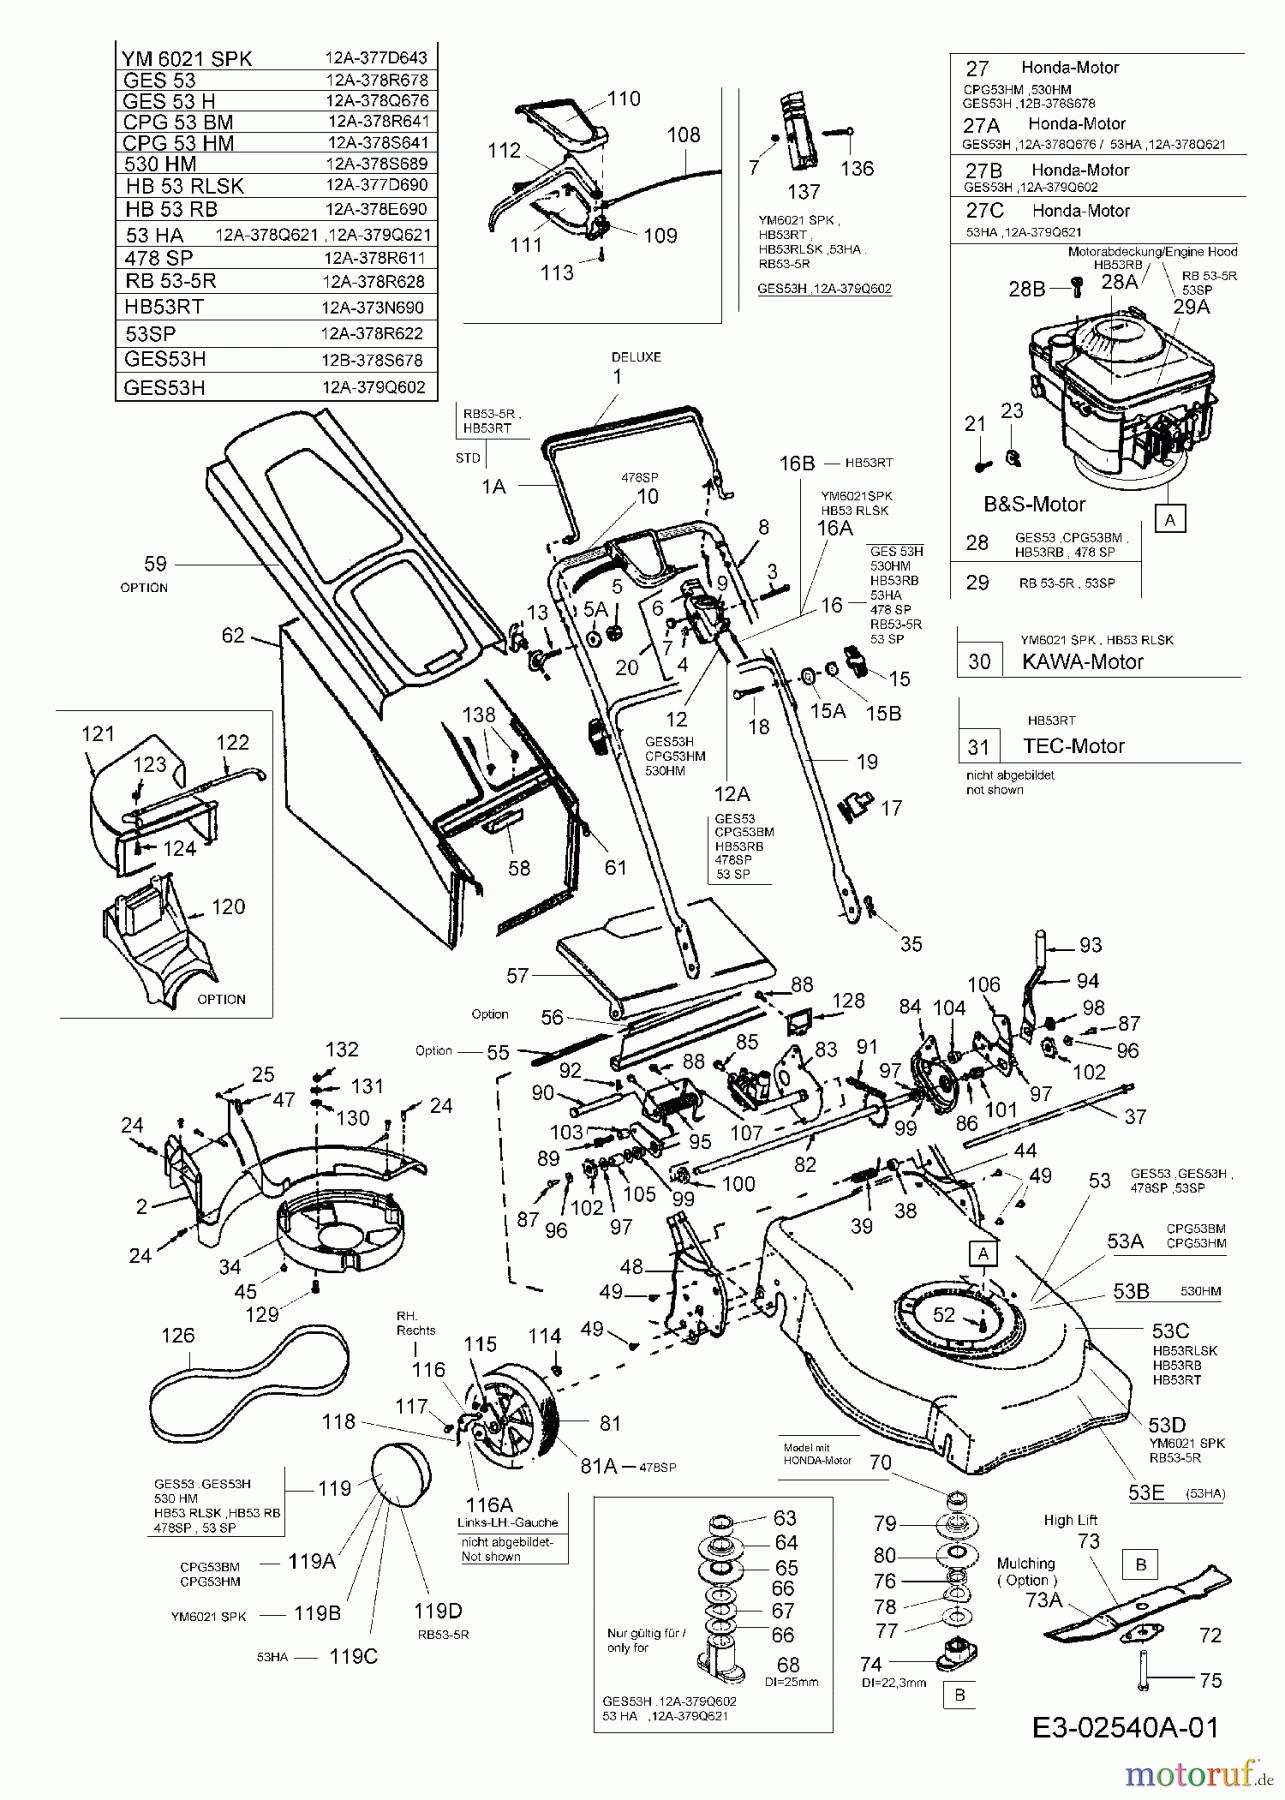  Central Park Motormäher mit Antrieb CPG 53 BM 12A-378R641  (2005) Grundgerät